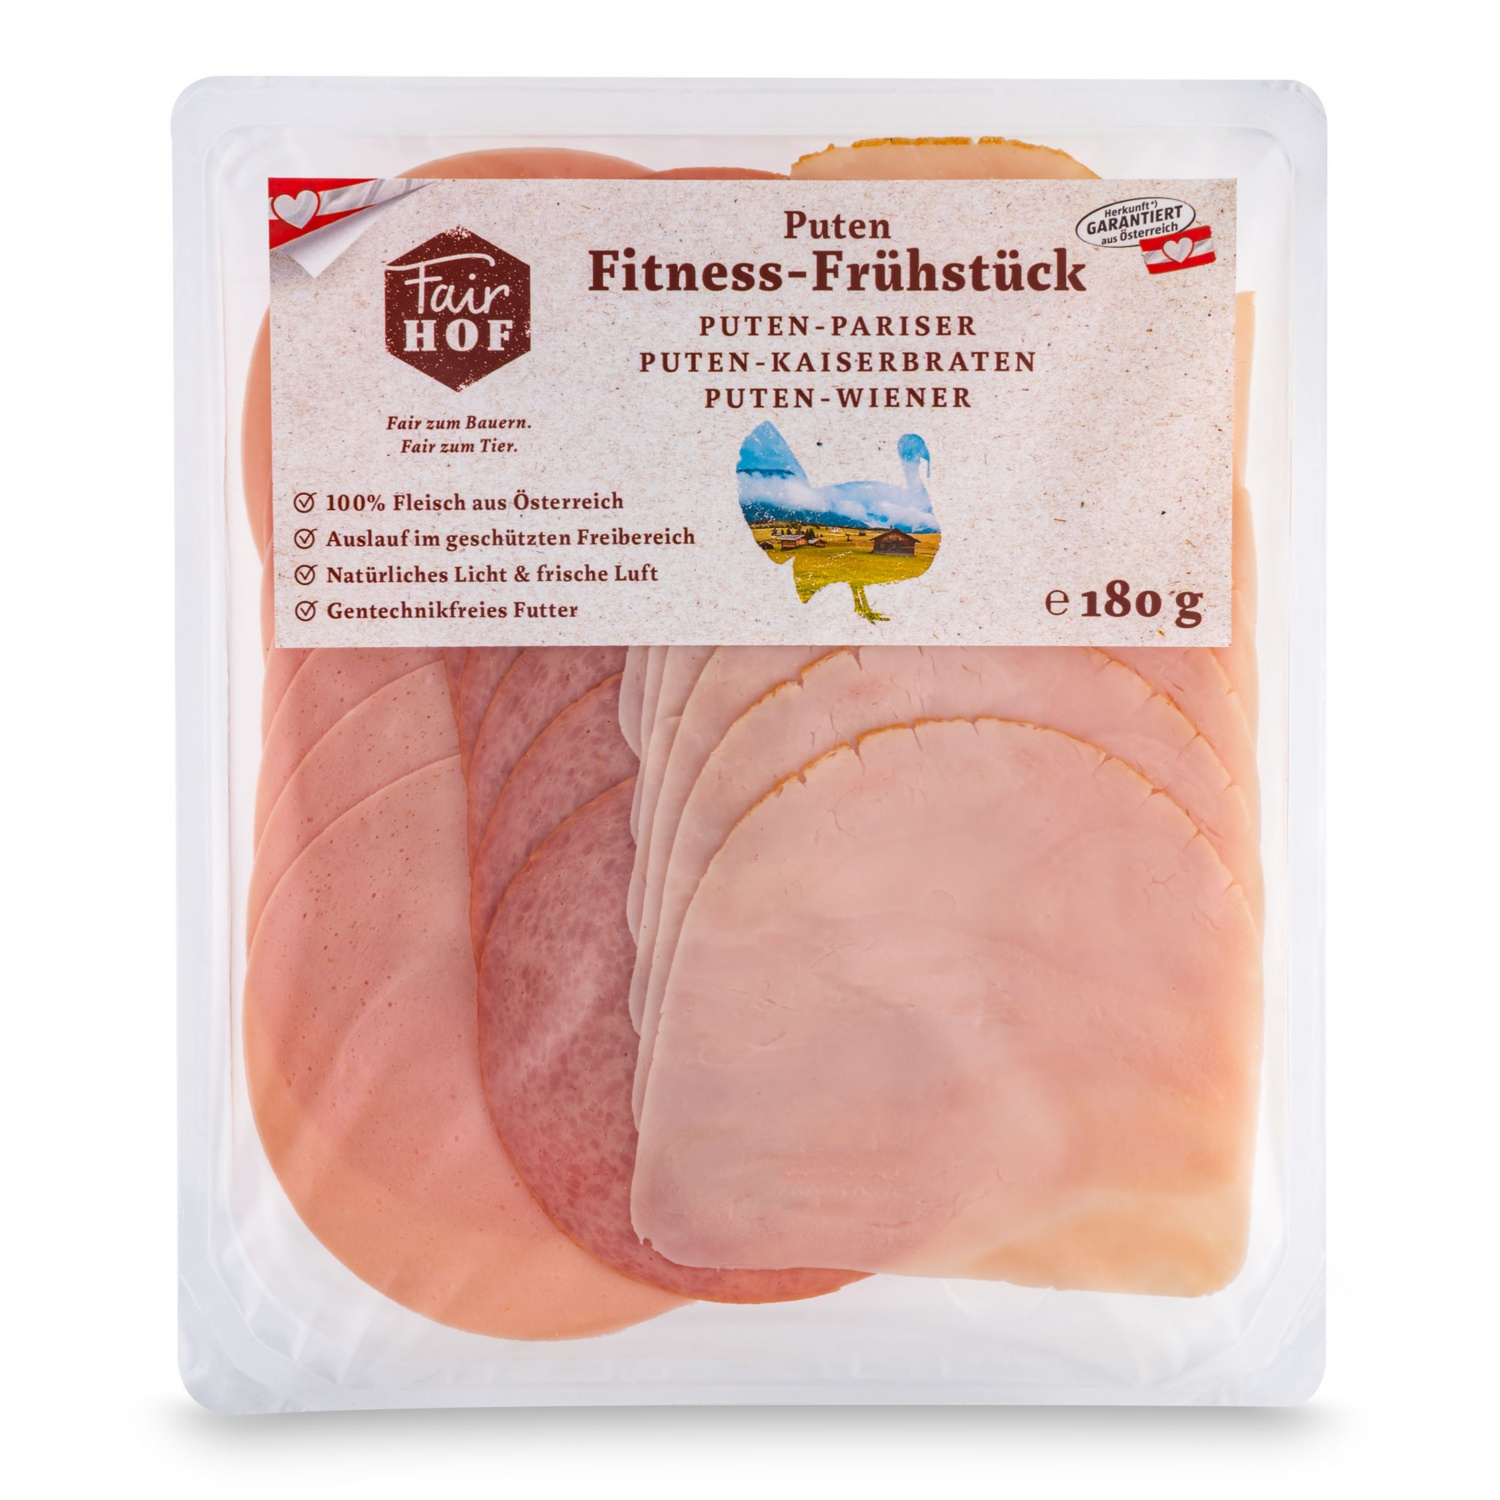 FairHOF Puten-Fitness-Frühstück